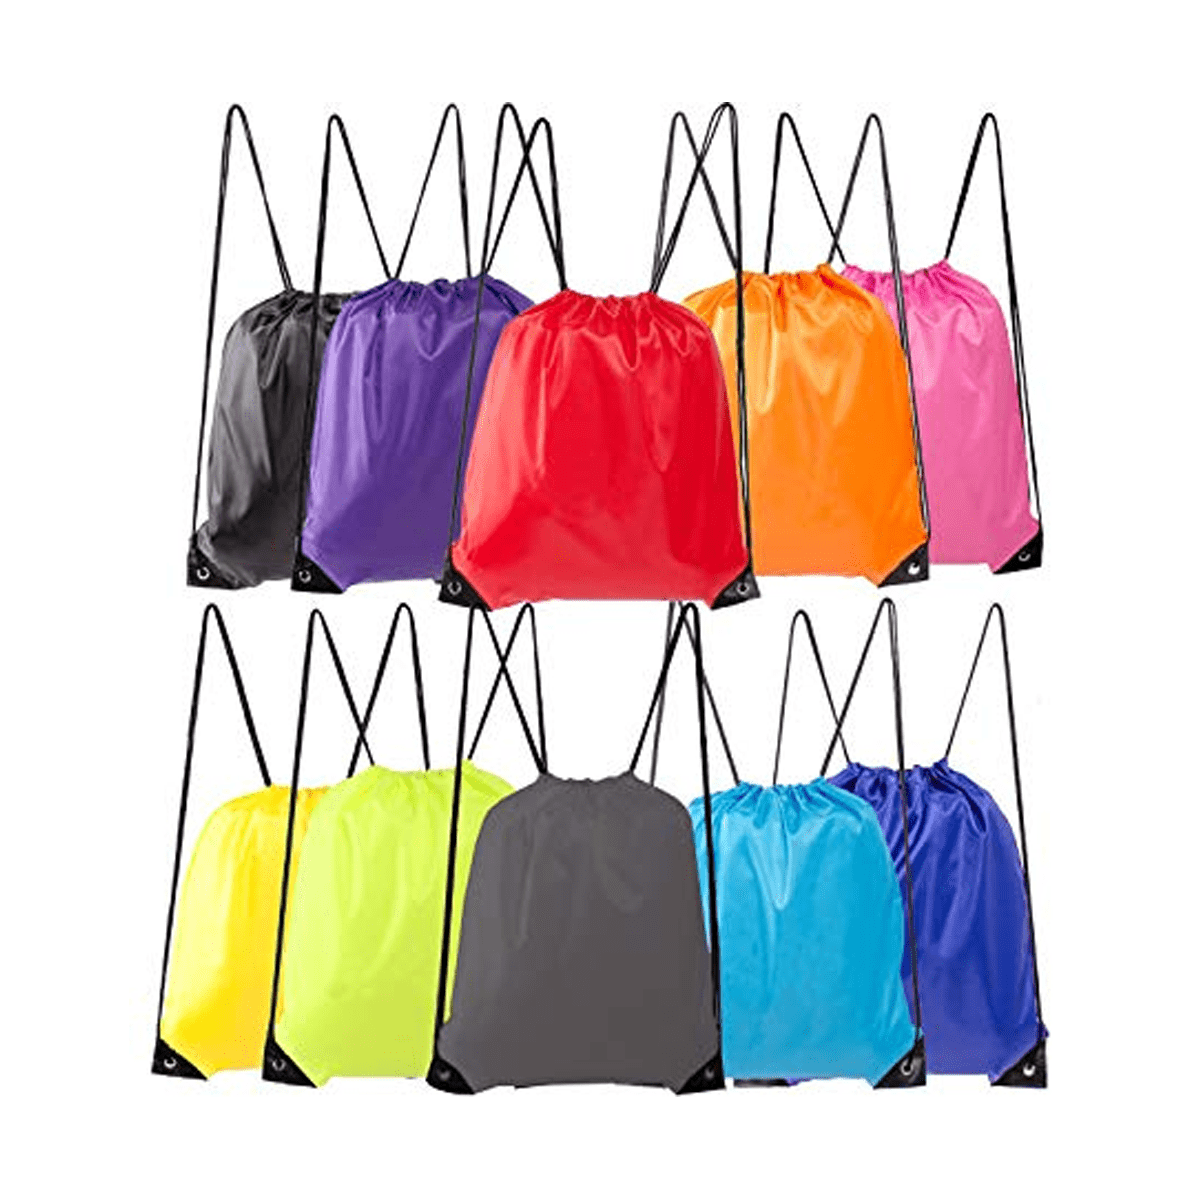 Durable Polyester Drawstring Tote Bags (Pack of 10) - SquareDubai